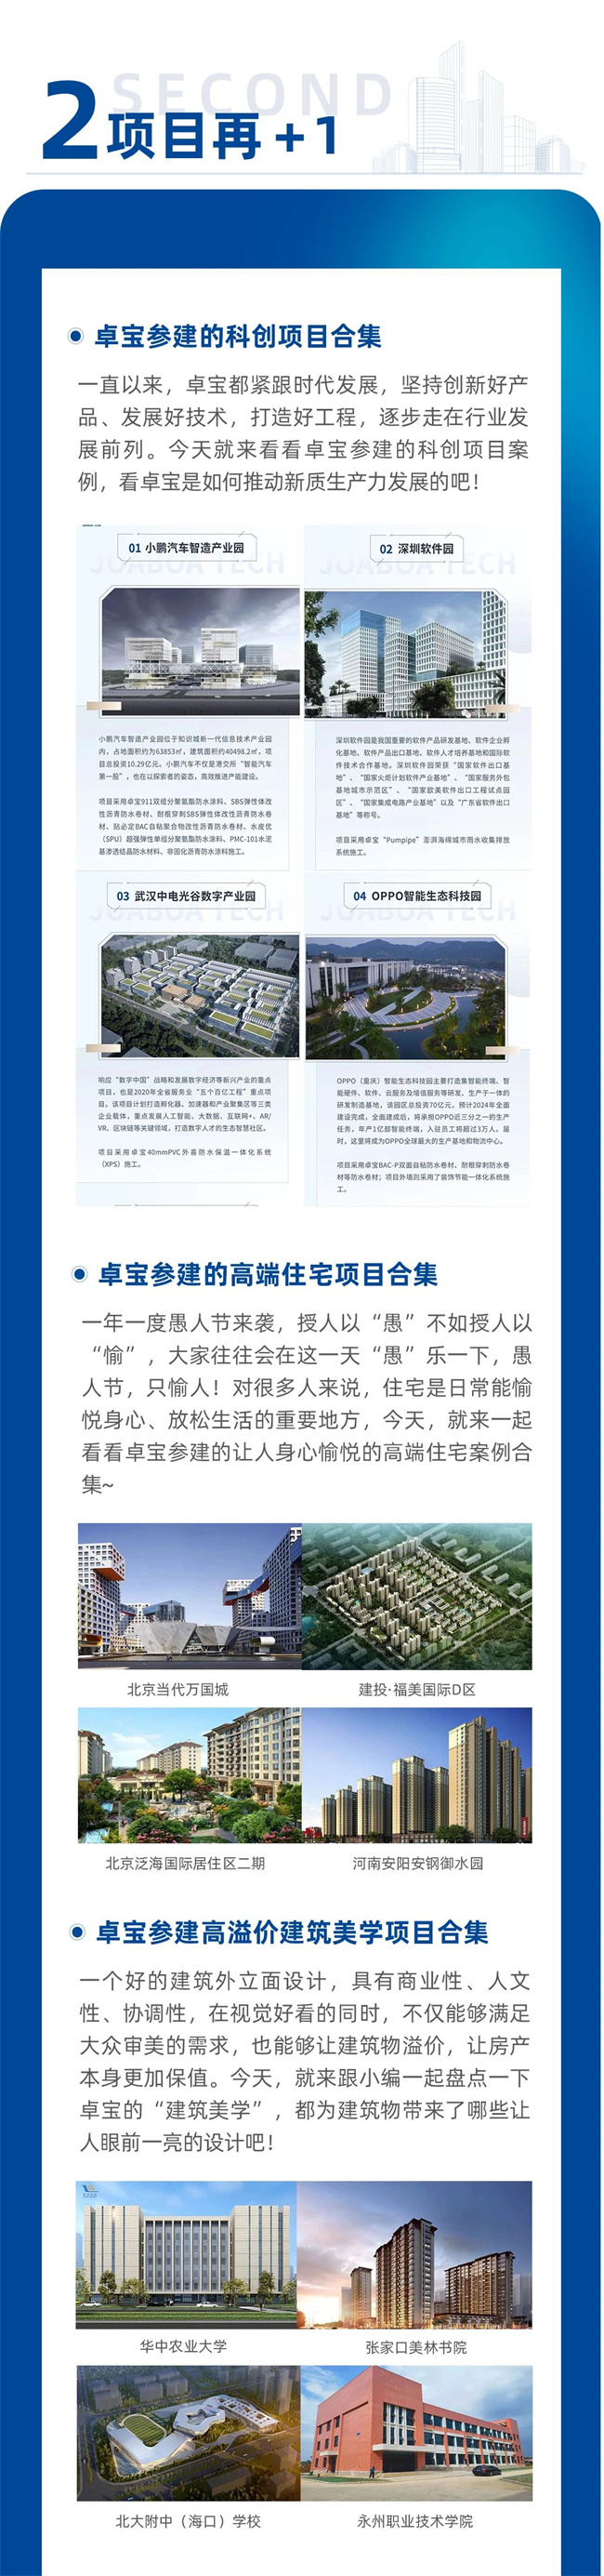  China Building Materials Network